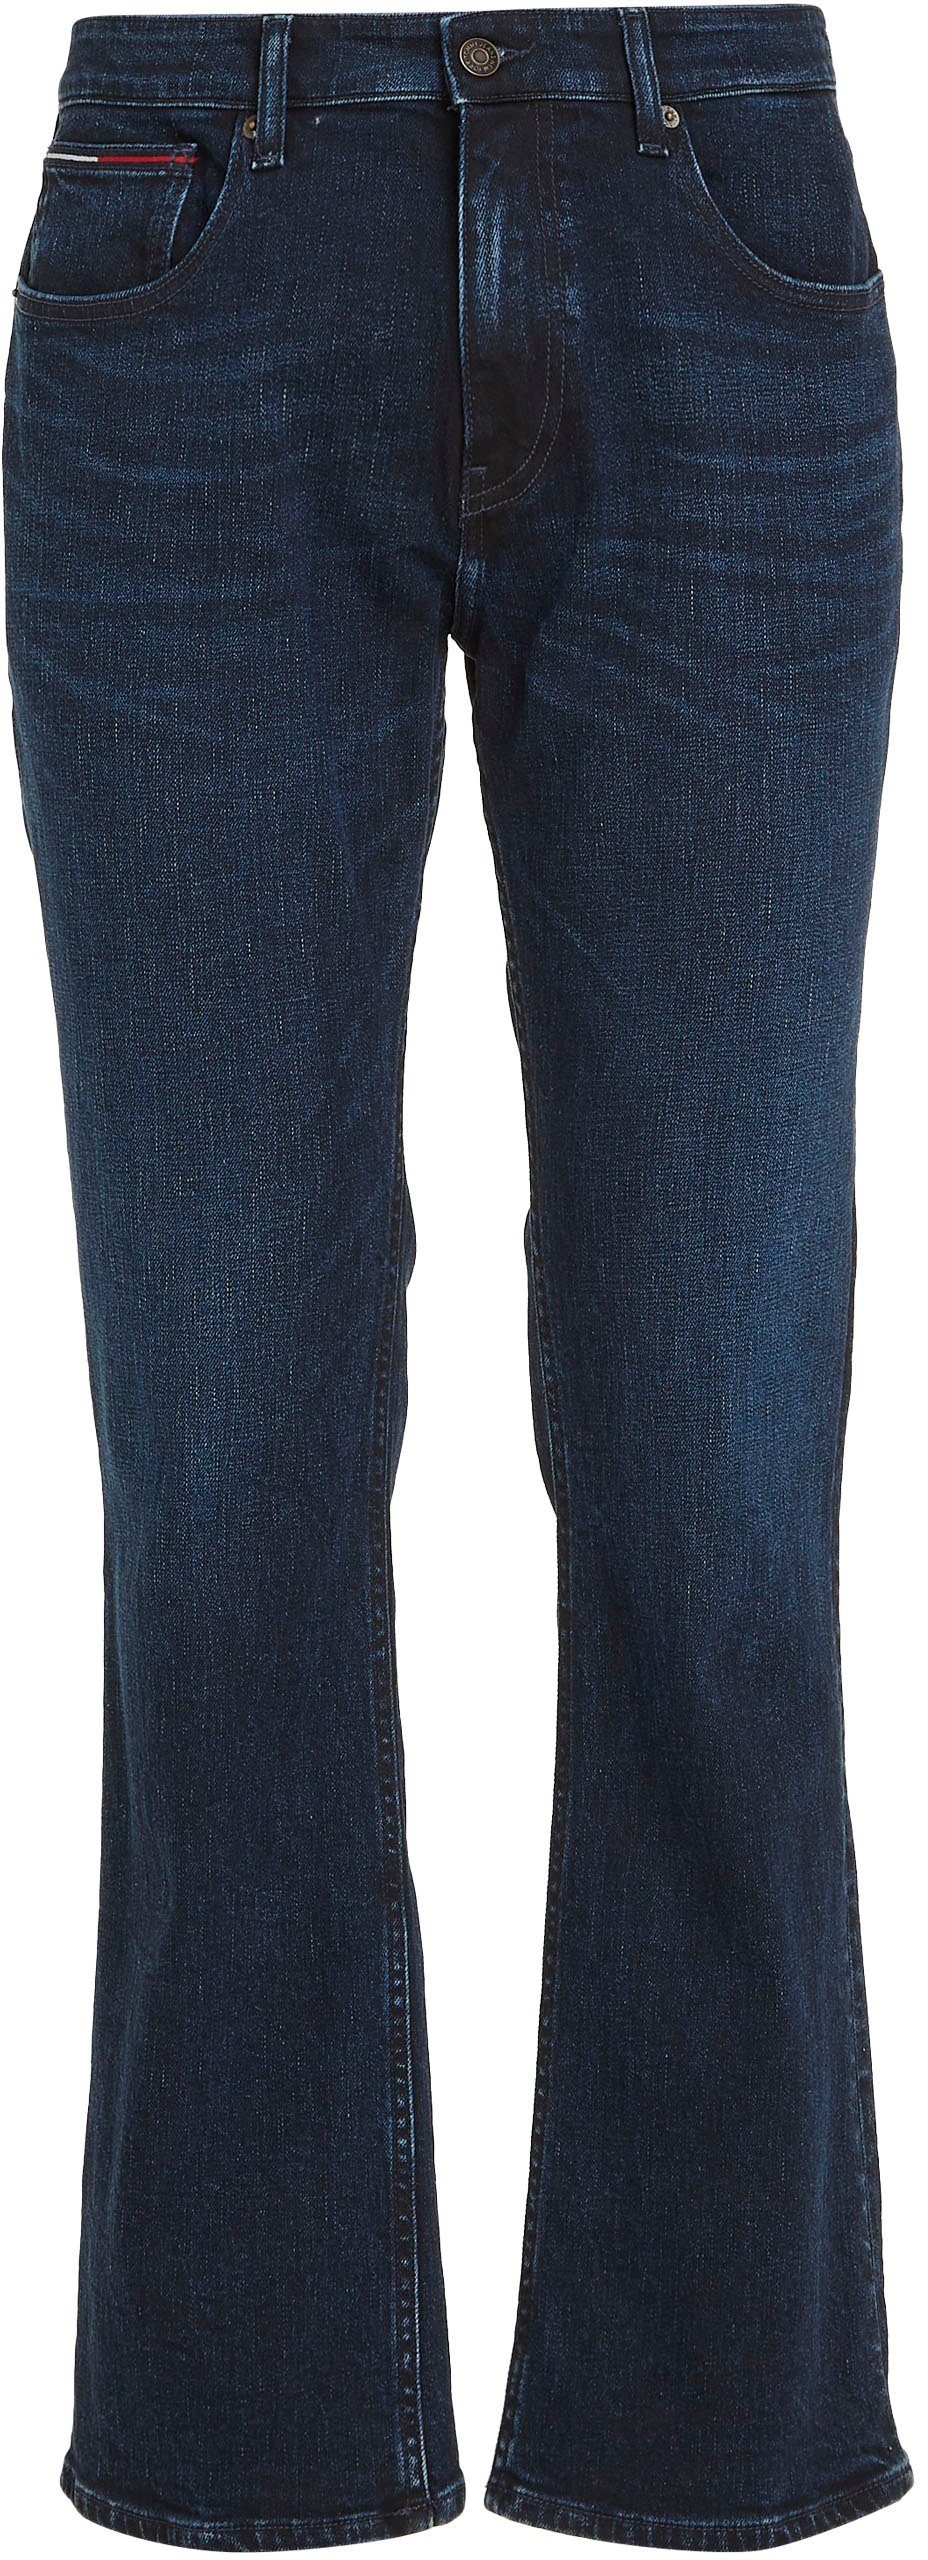 Jeans Knopf Slim-fit-Jeans Nieten blue Y washed mit & SLIM Tommy Jeans SCANTON Tommy